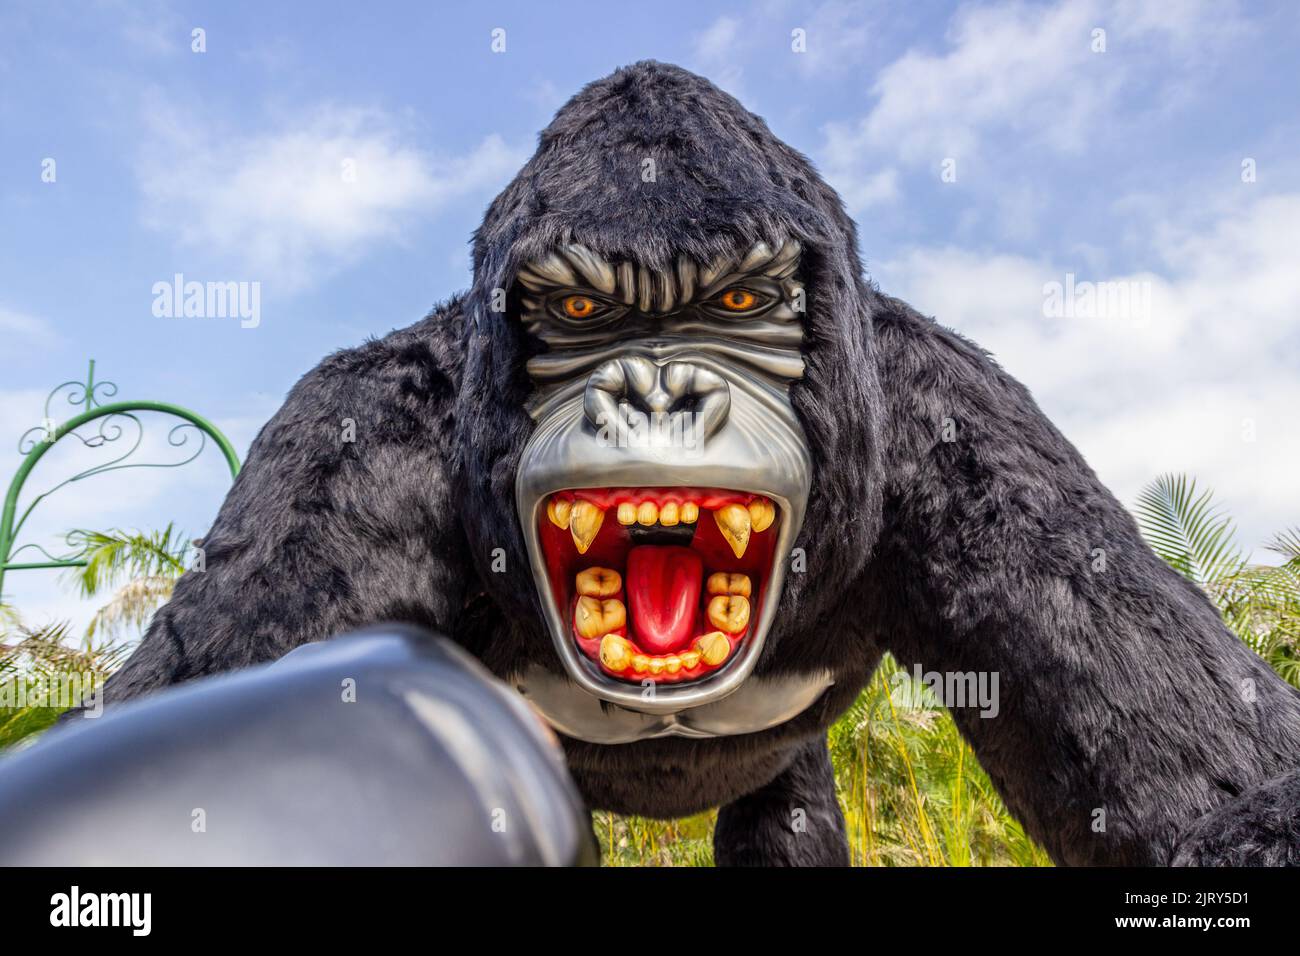 gorilla statue at Beto Carrero World Santa Catarina, Brazil - May 5 ...